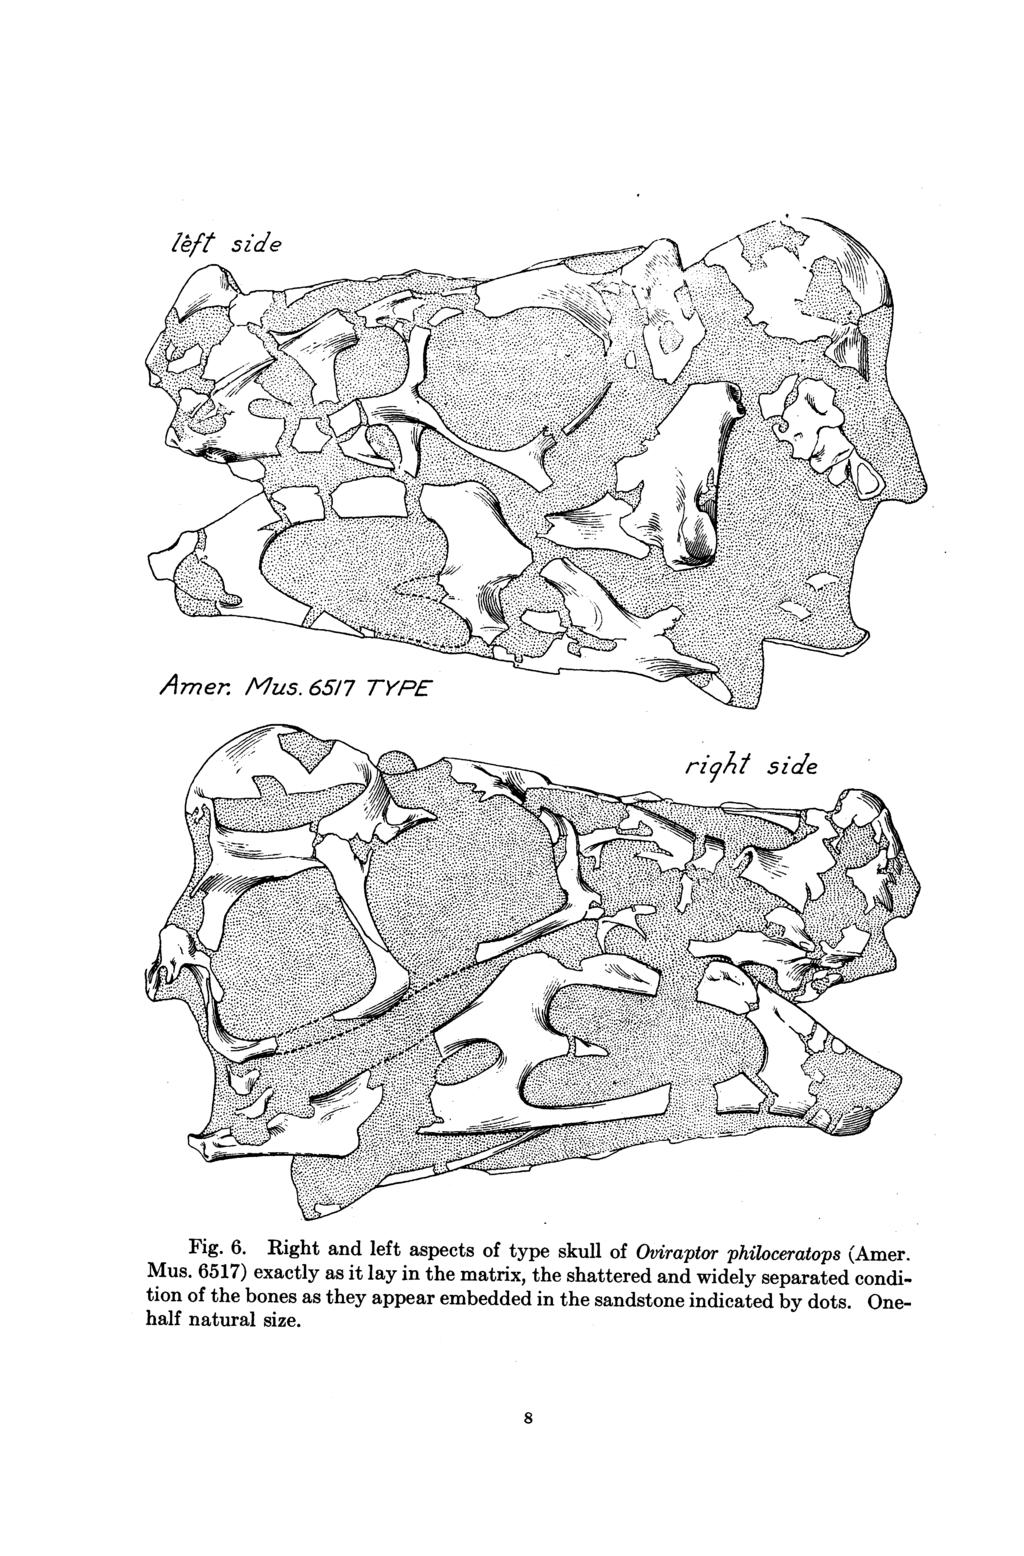 Fig. 6. Right and left aspects of type skull of Oviraptor philoceratops (Amer. Mus.